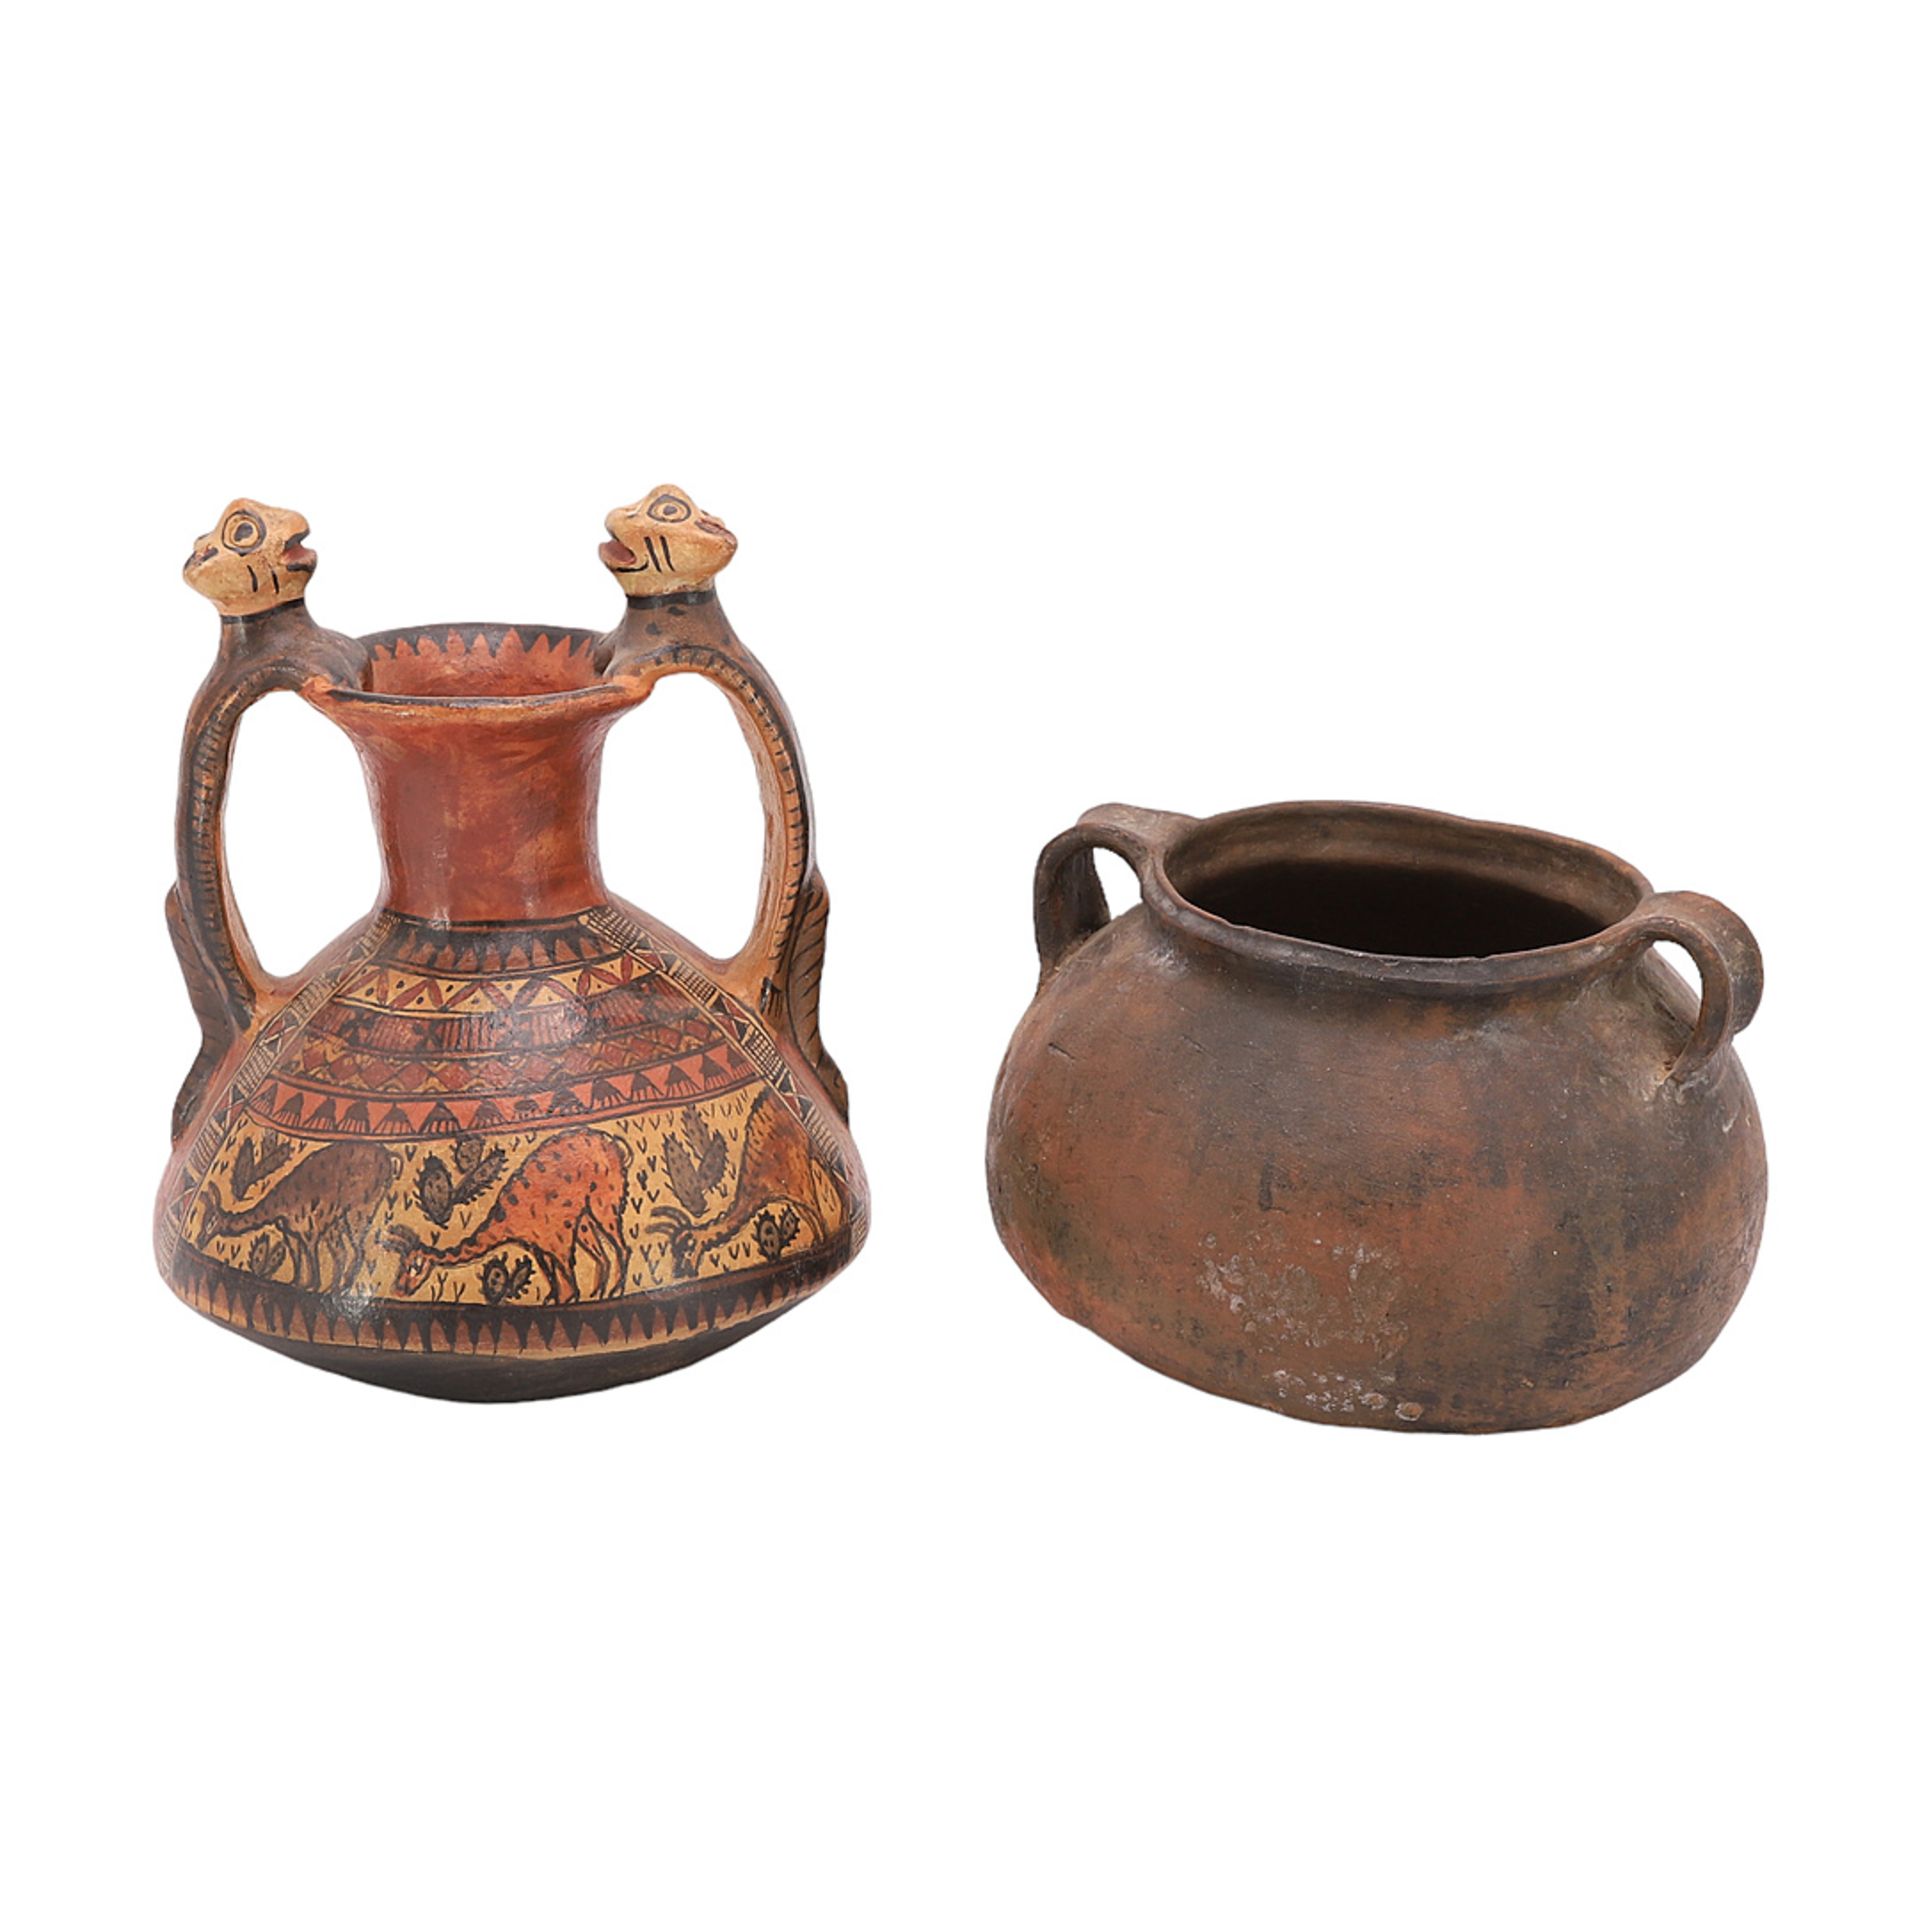 Two handle vases / jugs